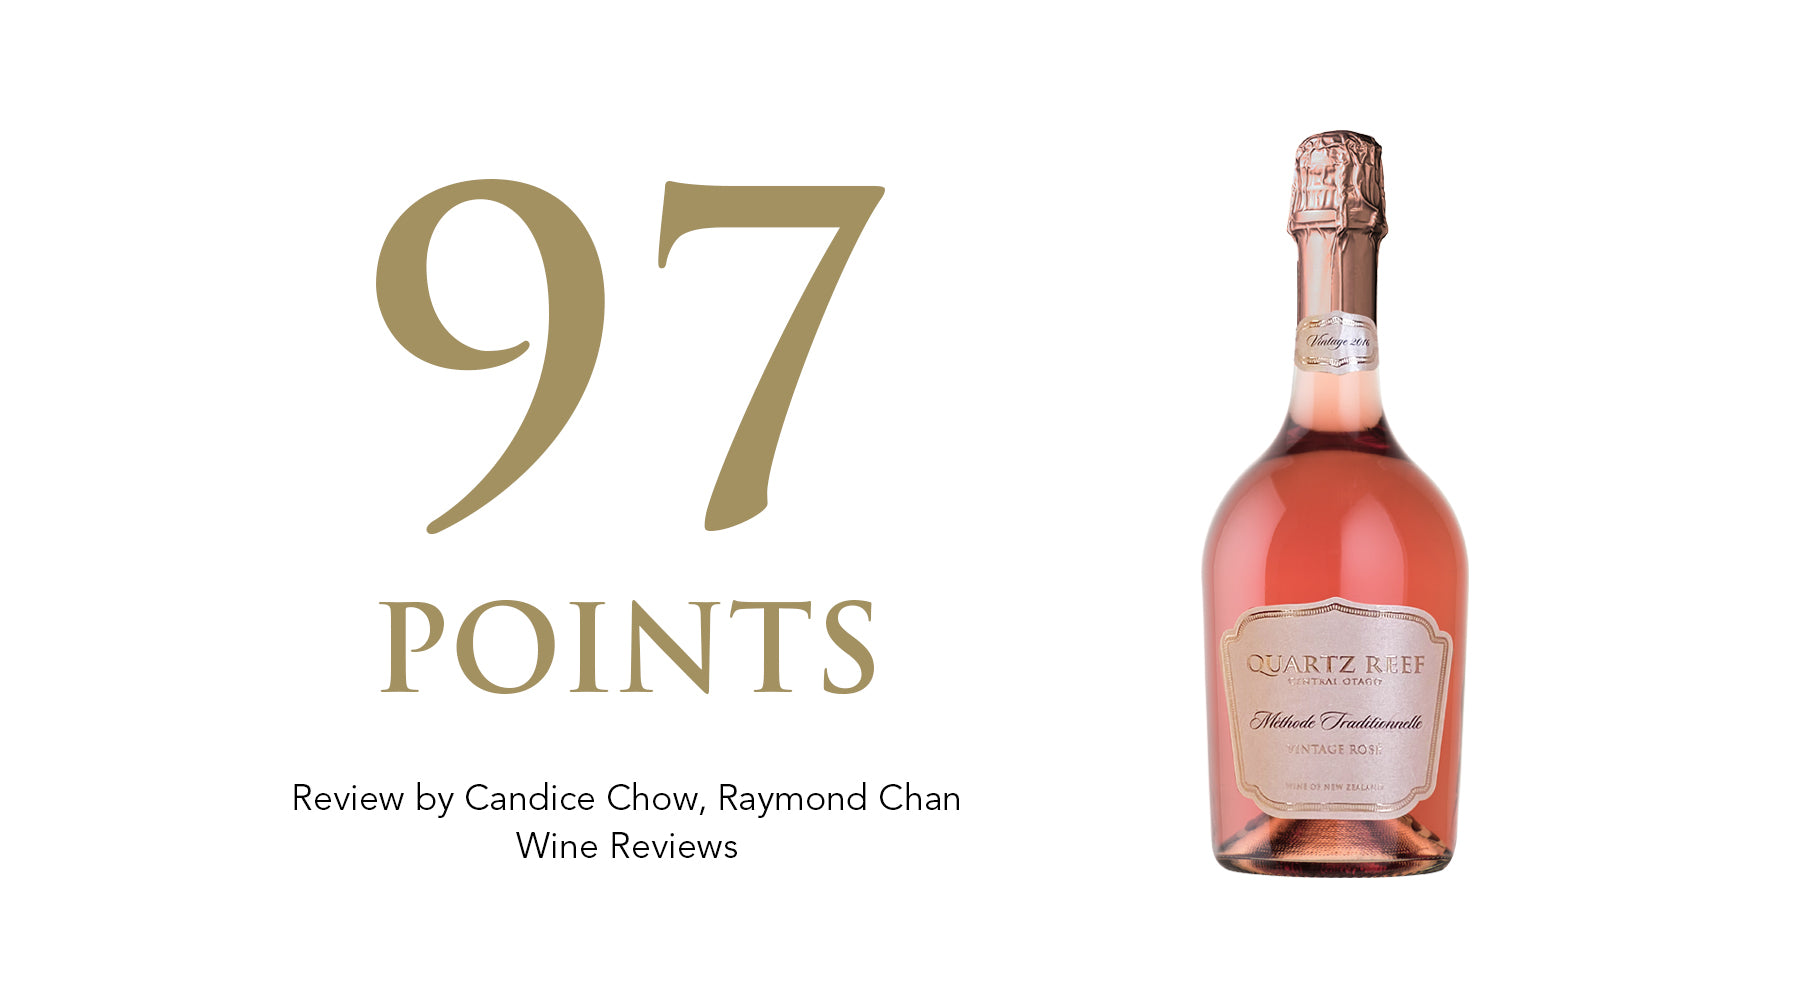 Methode Traditionnellé Vintage Rosé 2016 - Awarded 97 Points